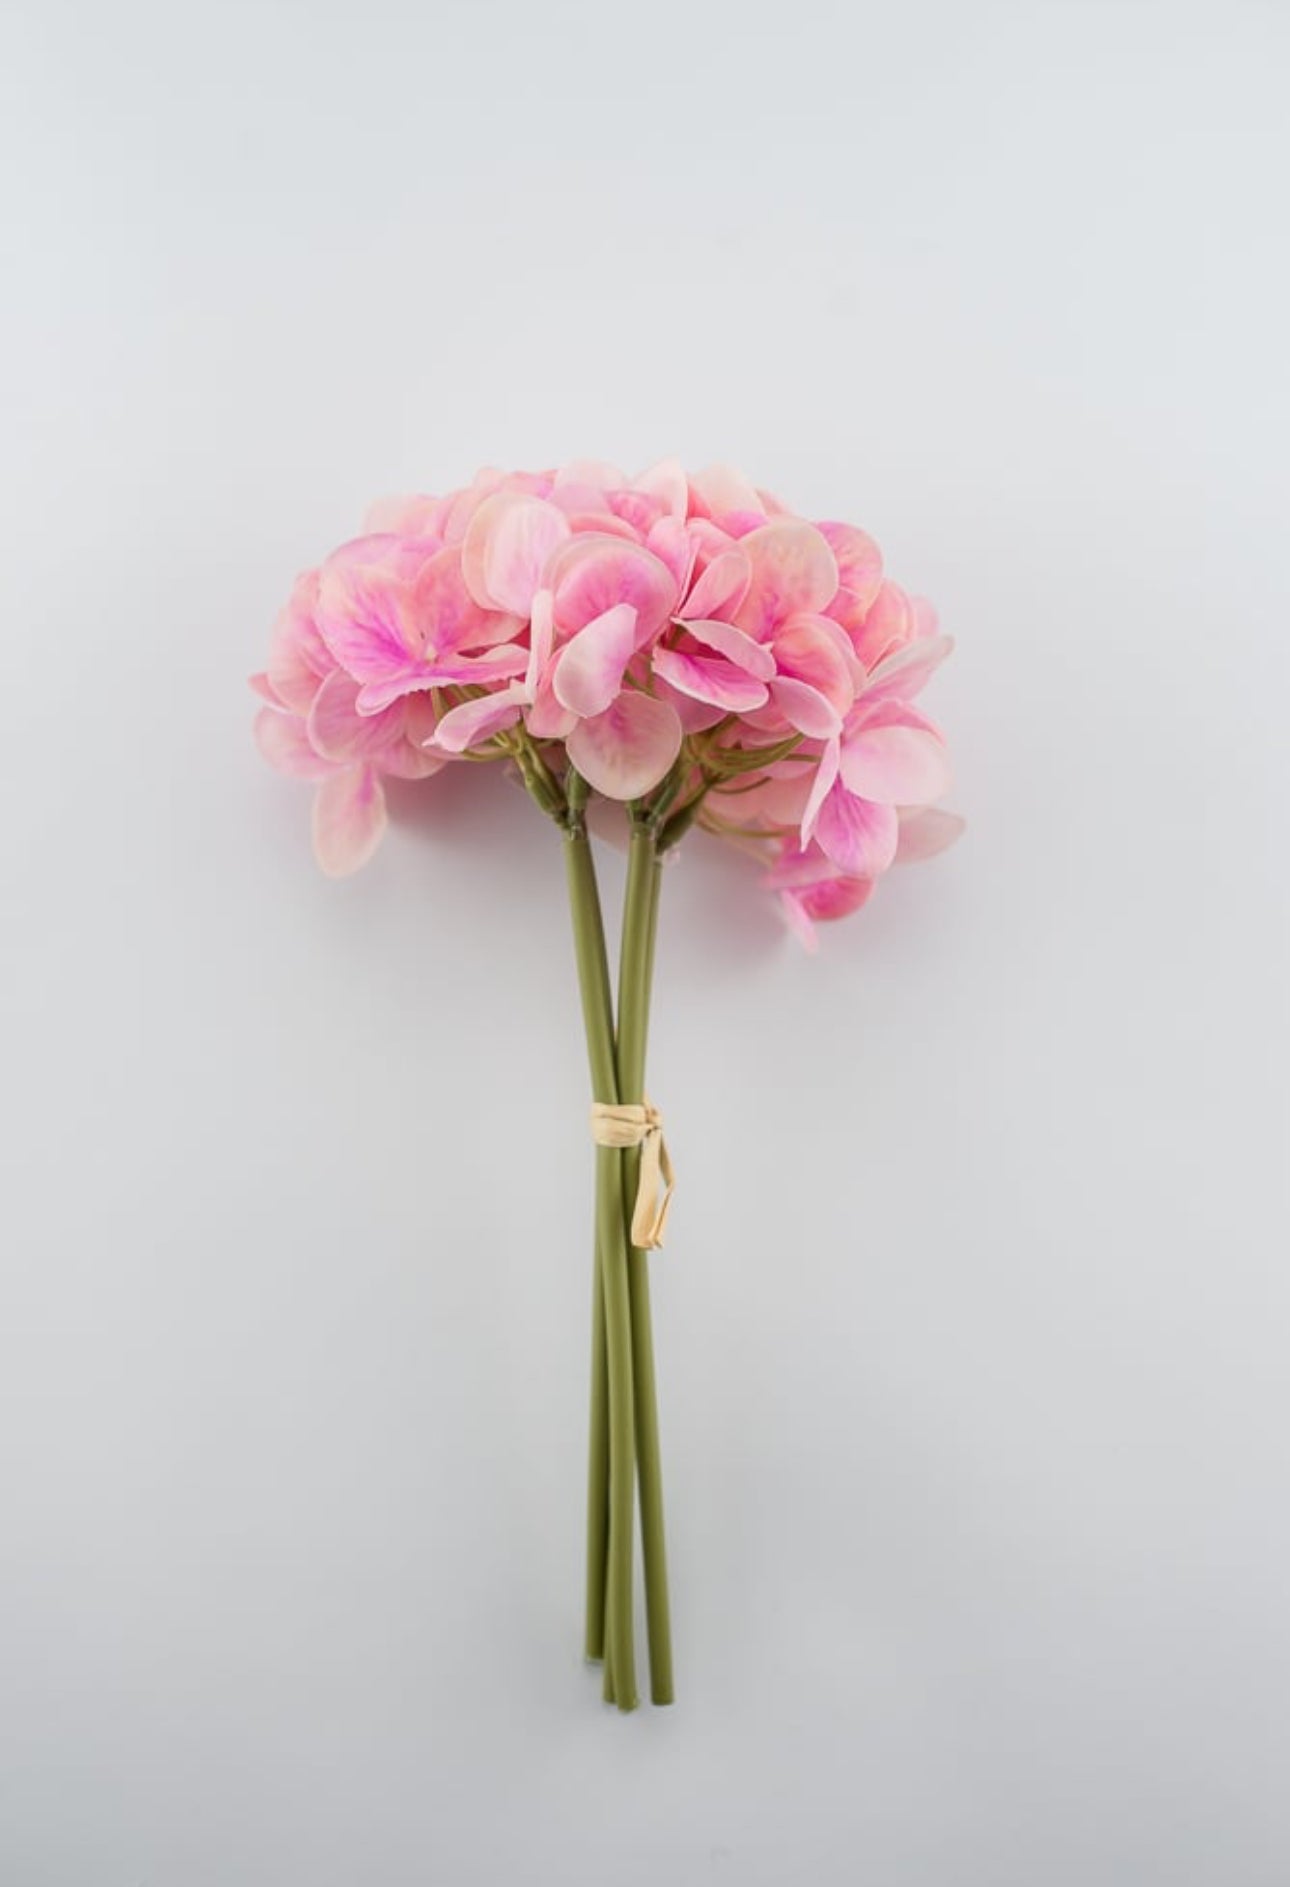 Hydrangeas bundle - natural touch - cerise pink - Greenery Marketartificial flowers5608-CER